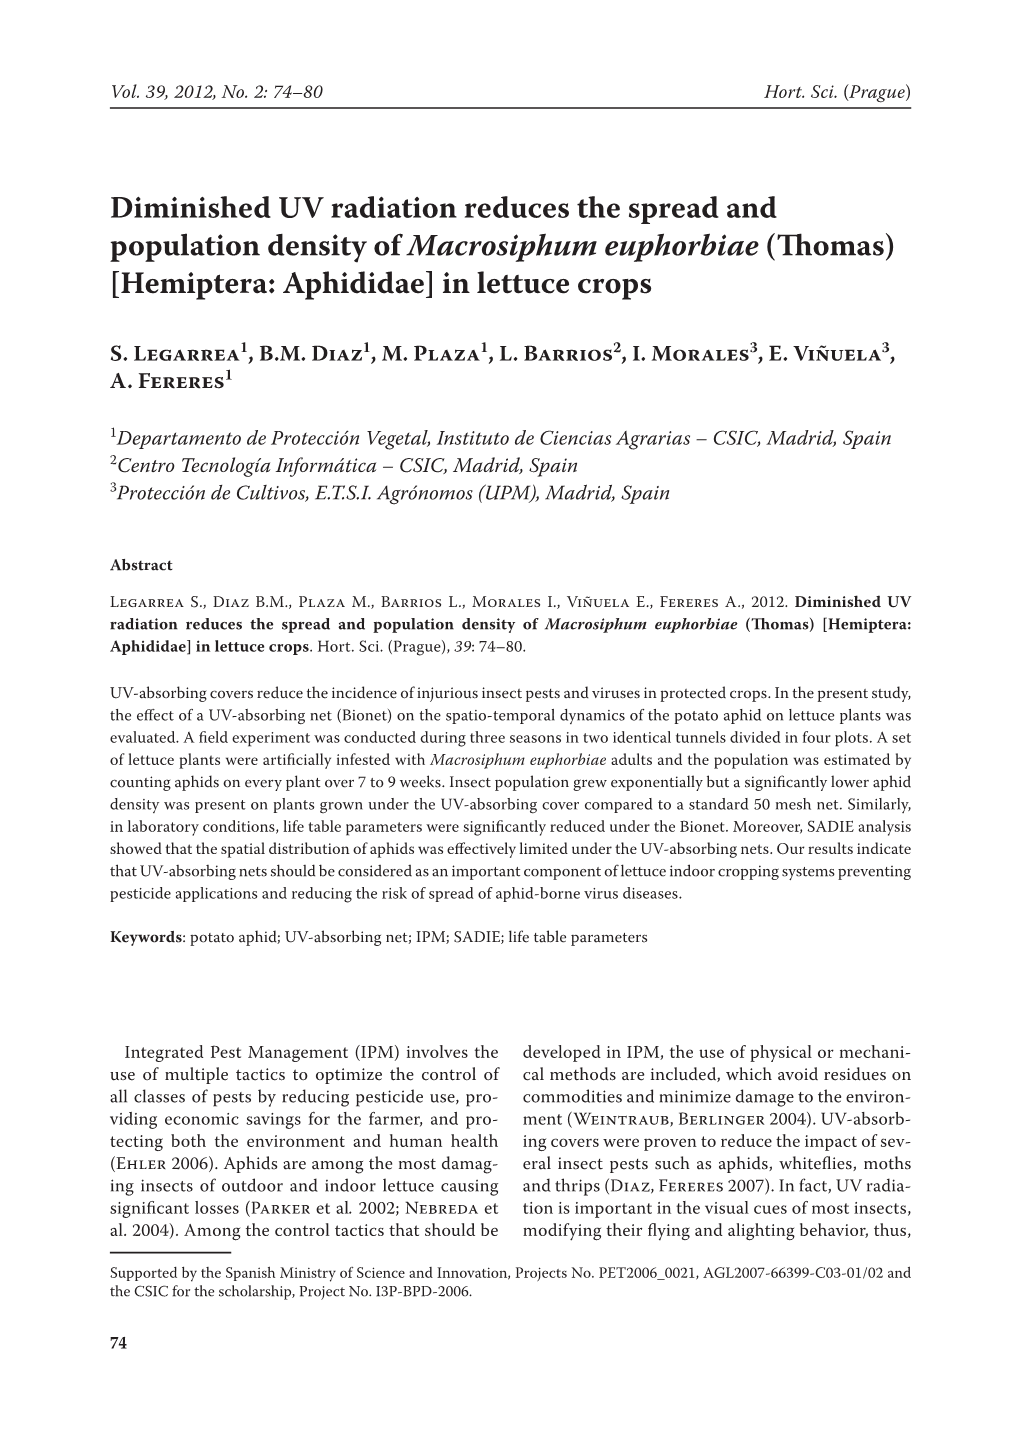 Diminished UV Radiation Reduces the Spread and Population Density of Macrosiphum Euphorbiae (Thomas) [Hemiptera: Aphididae] in Lettuce Crops